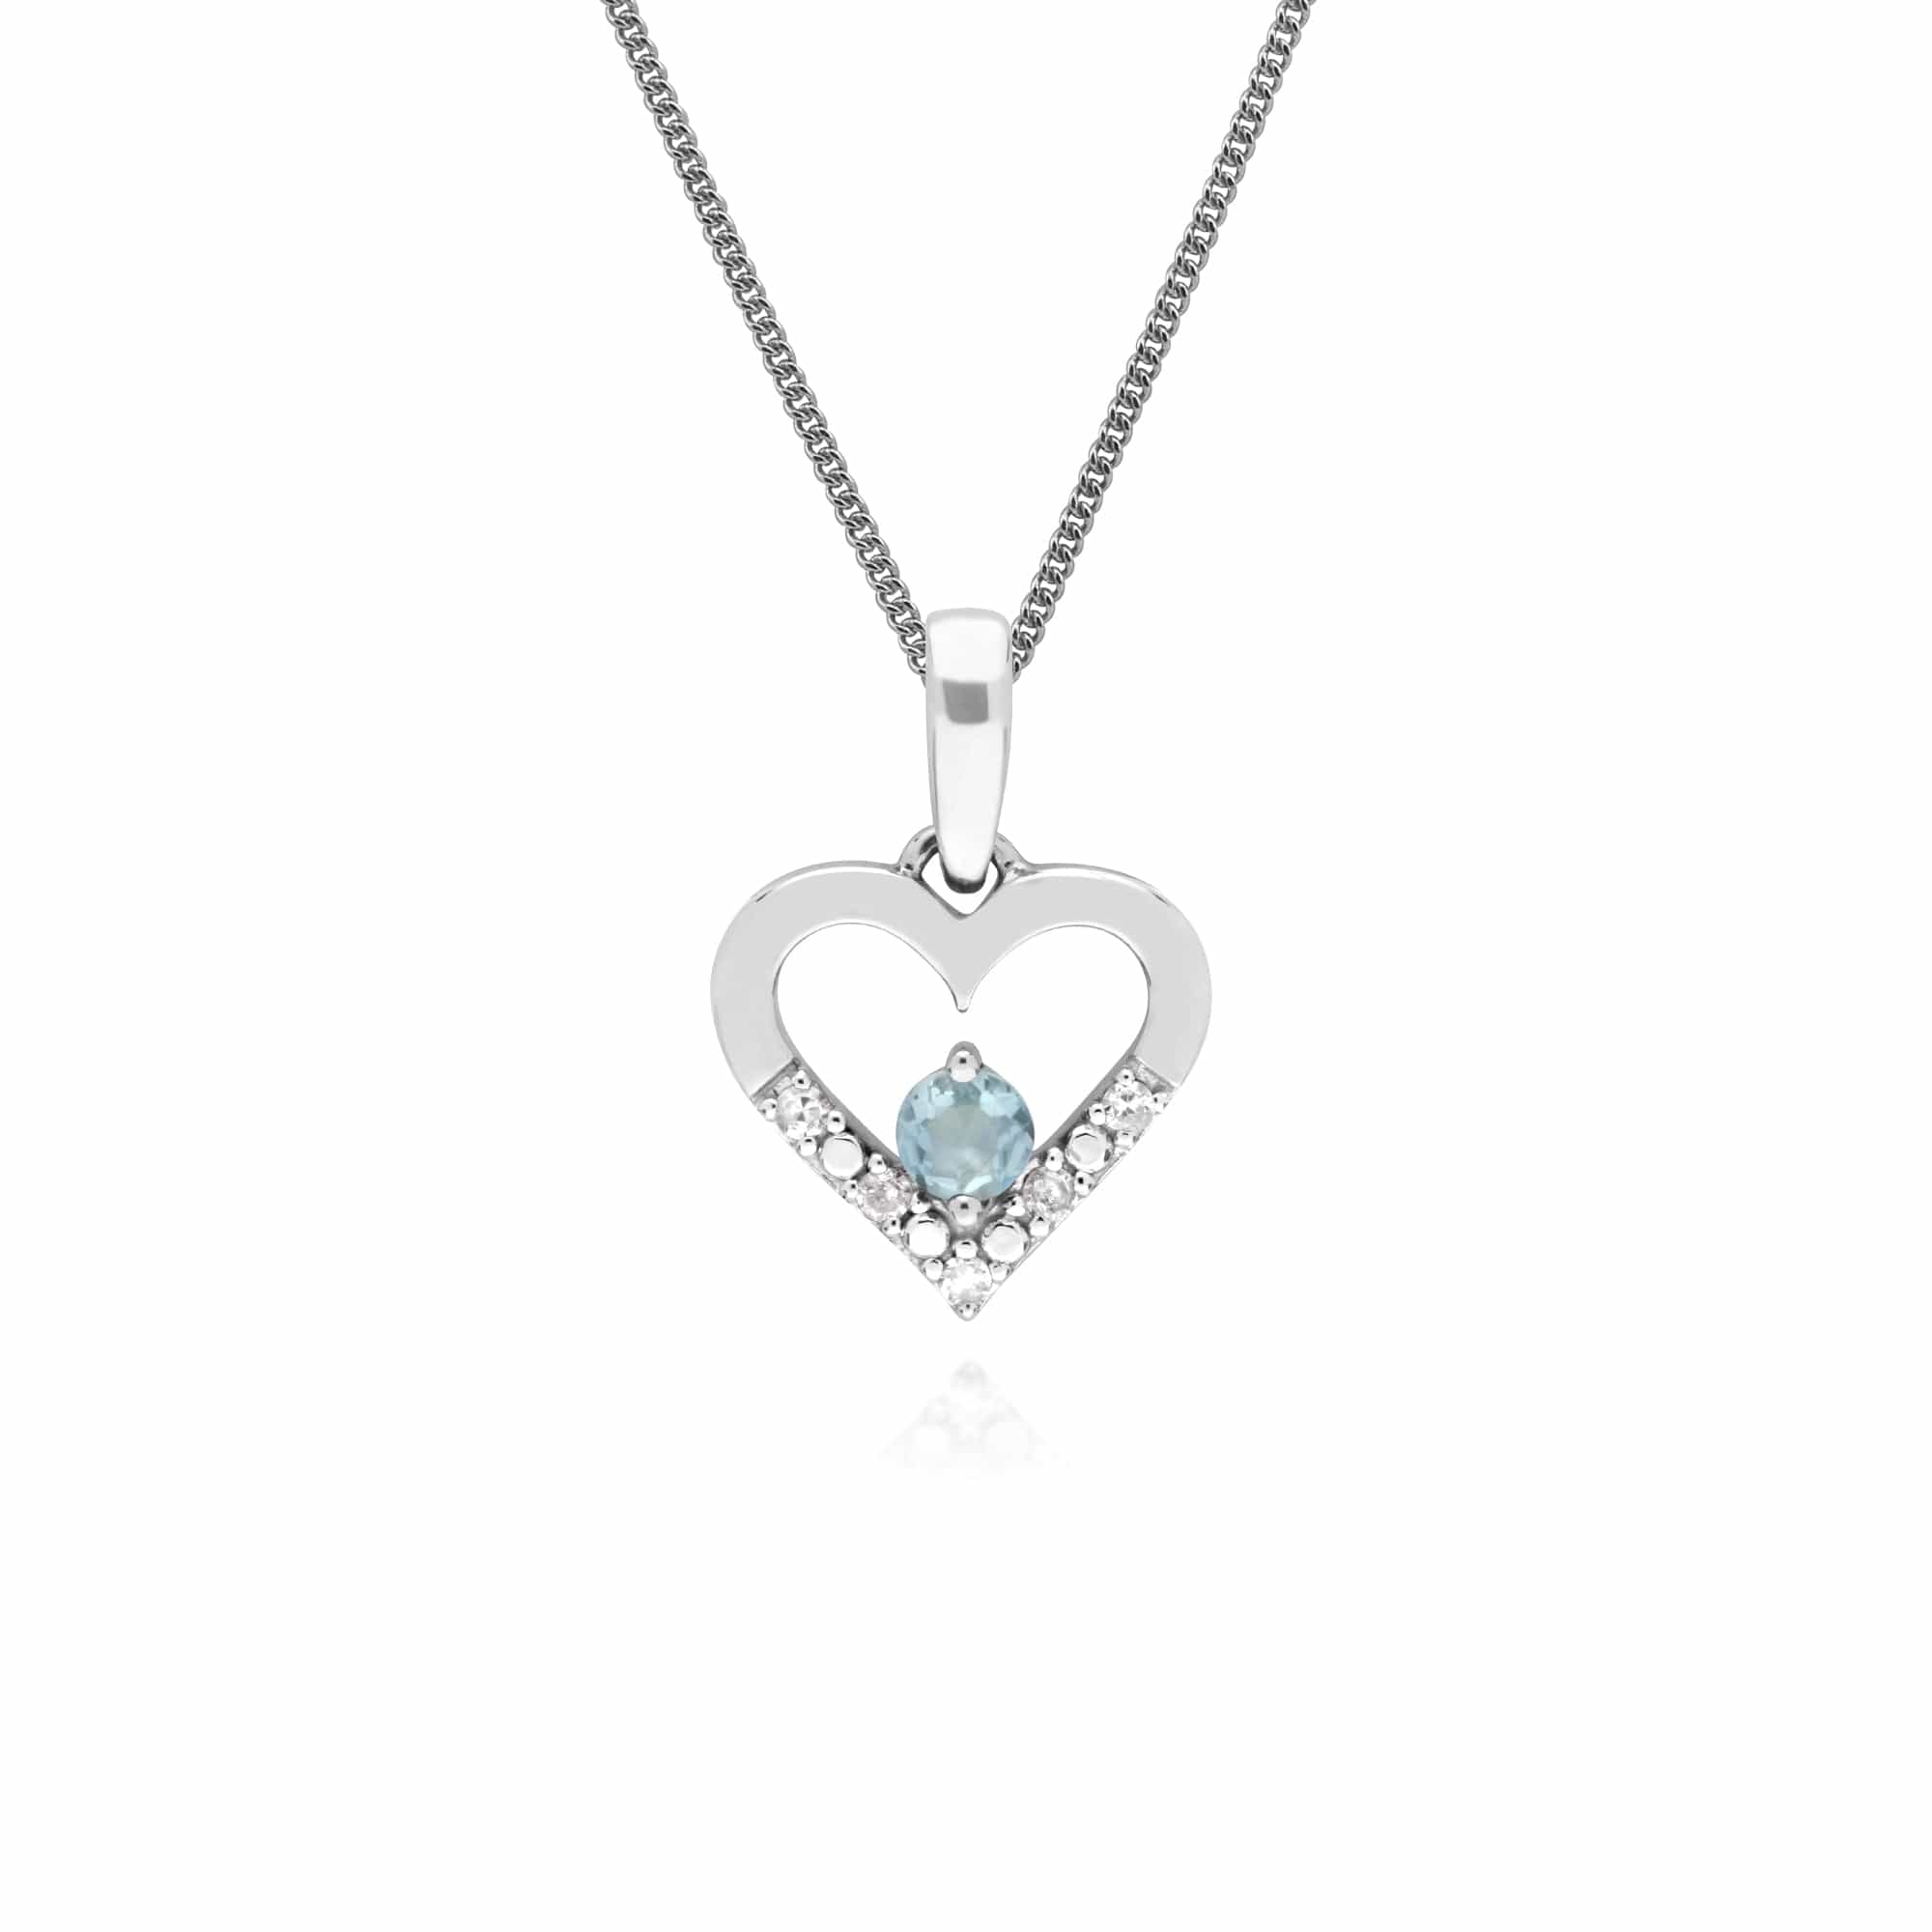 Photos - Pendant / Choker Necklace Classic Aquamarine & Diamond Love Heart Shaped Pendant in 9ct White Gold